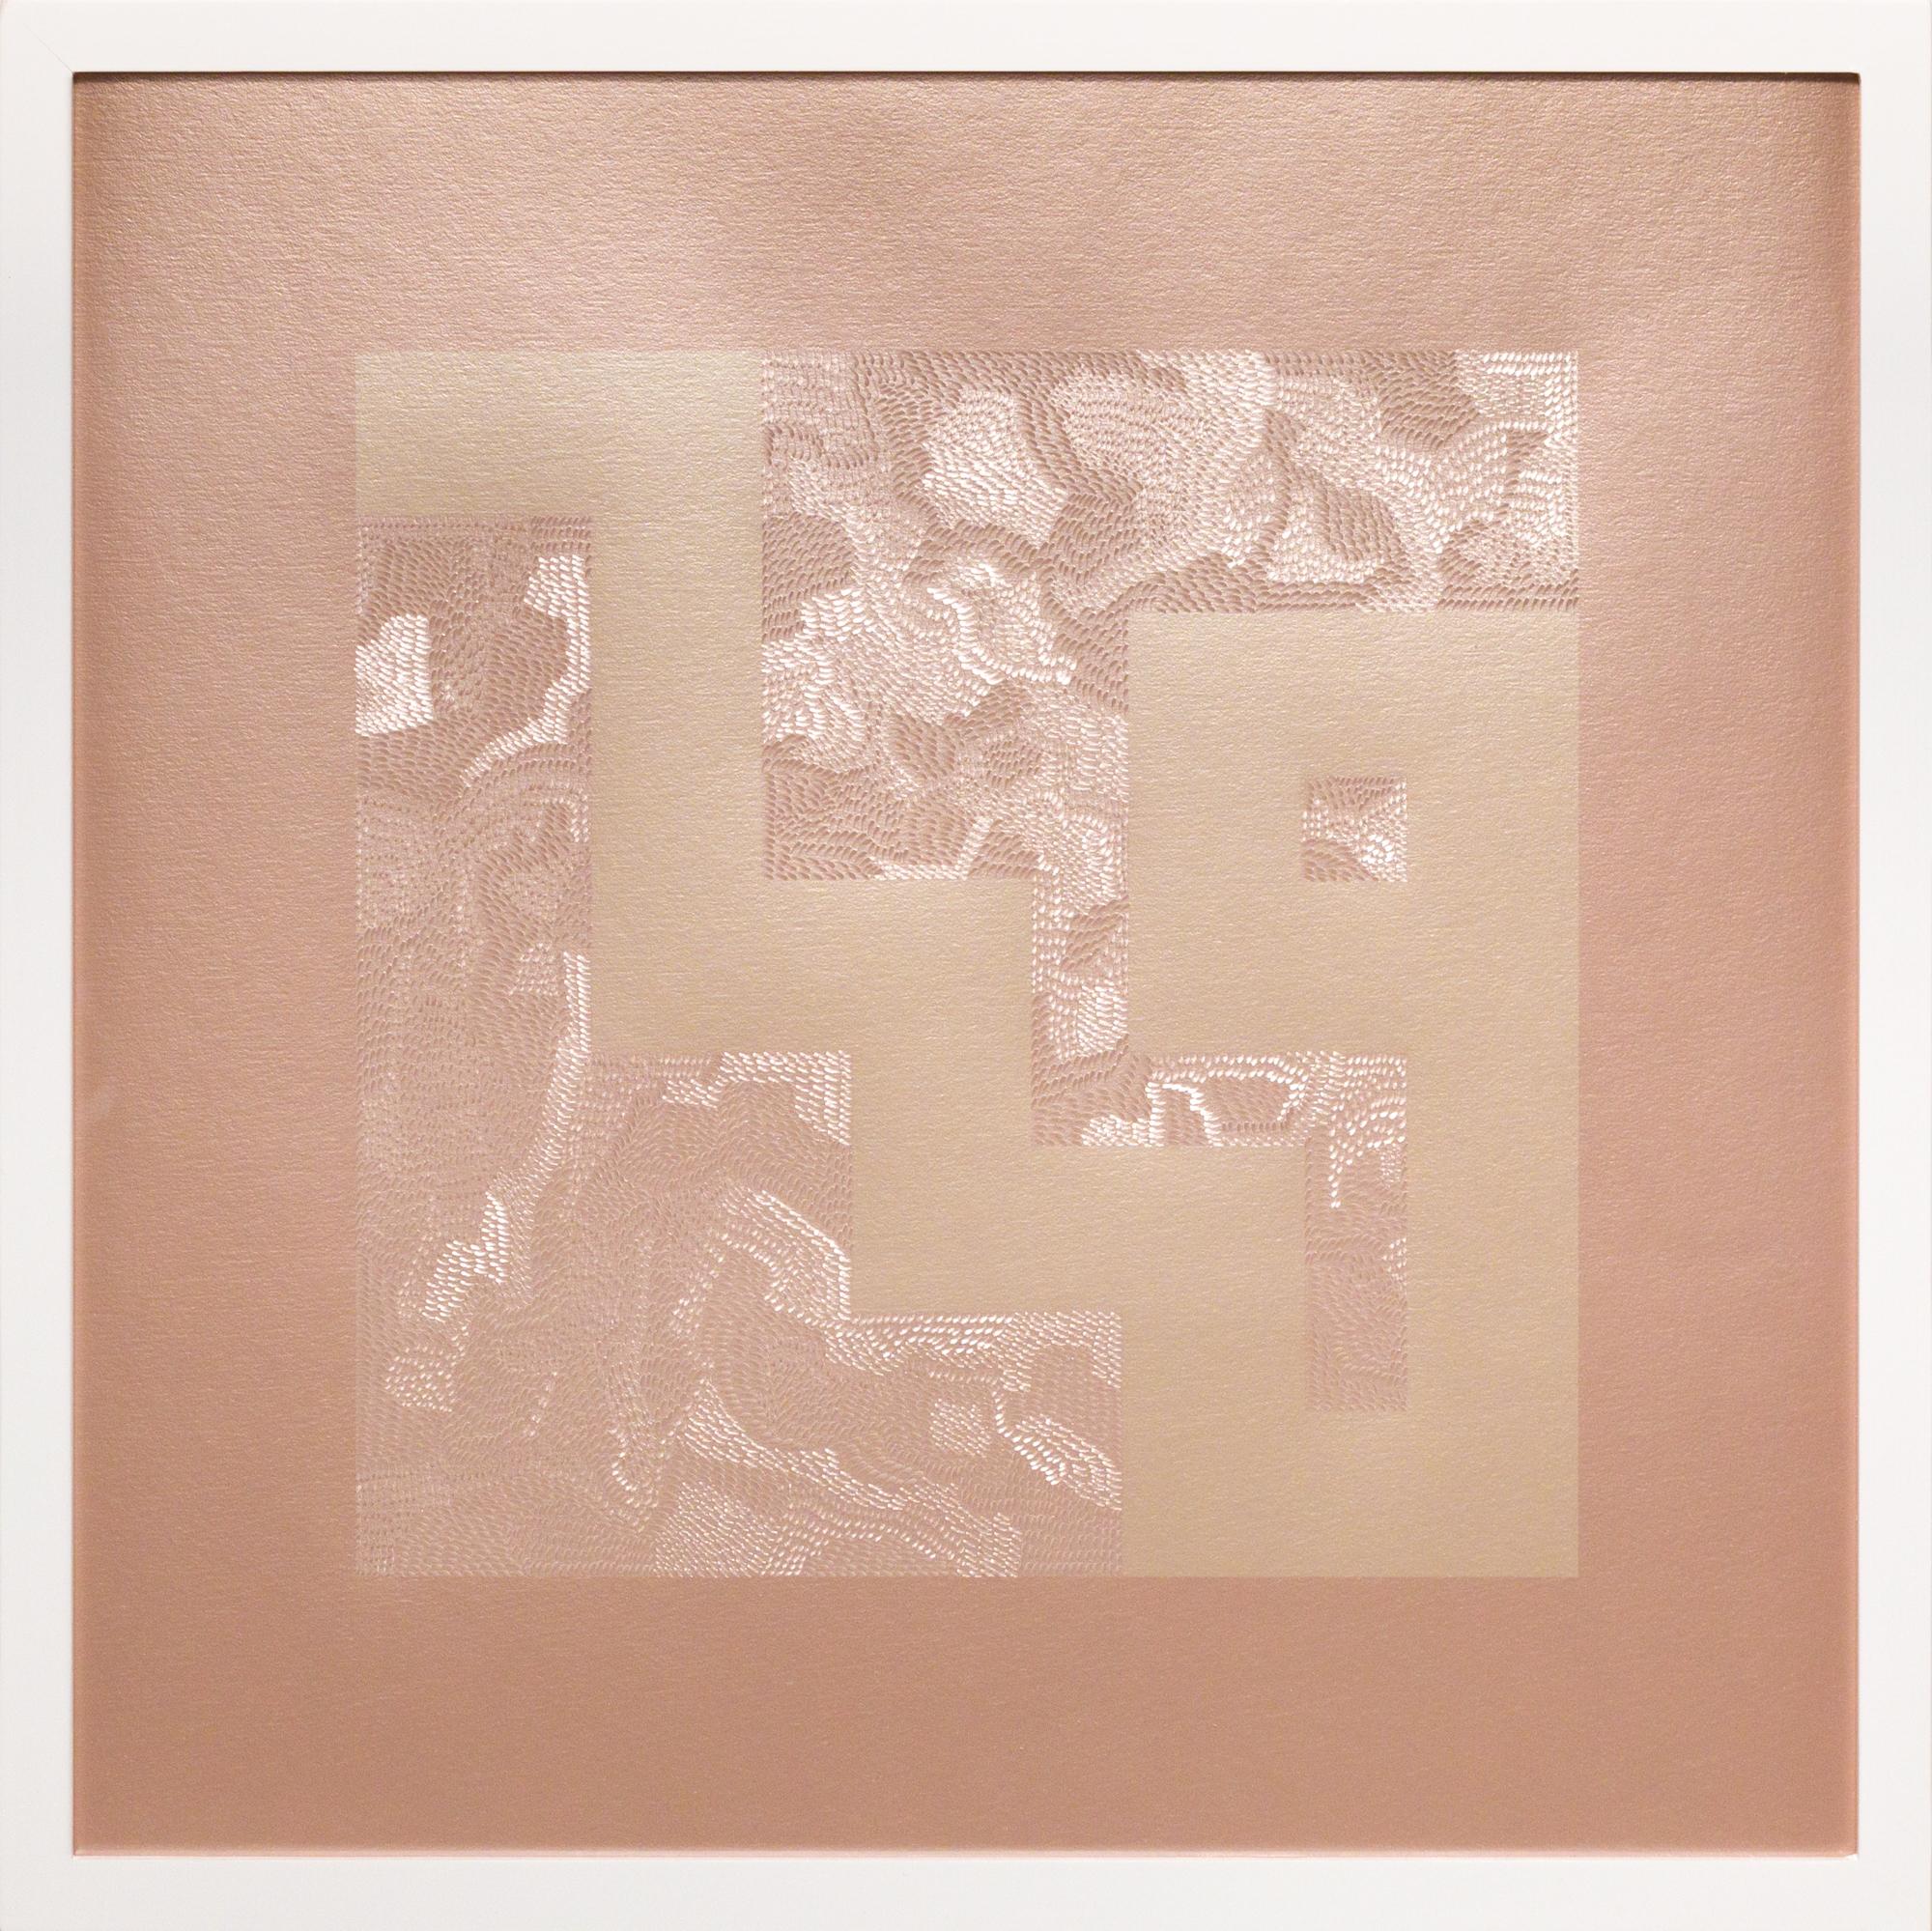   Lucha Rodríguez Abstract Print - "Buscando un Tesoro II, Knife Drawing", hand cut giclée print, metallic paper